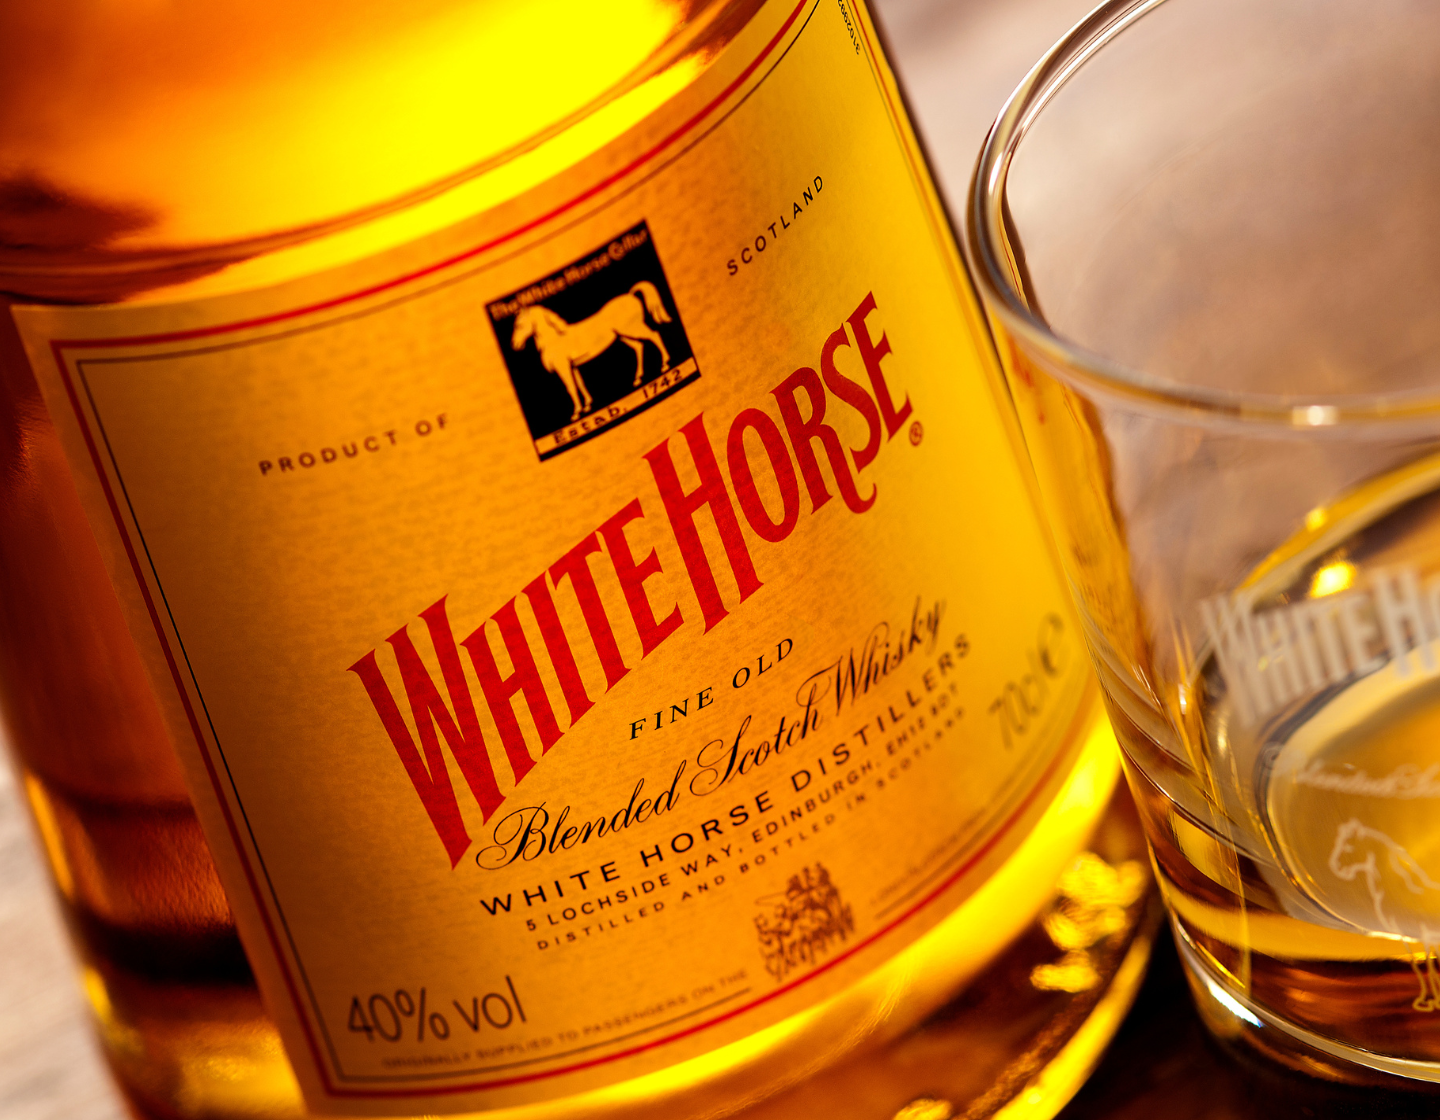 Garrafa de whisky White Horse sobre a mesa, ao lado de um copo de whisky puro